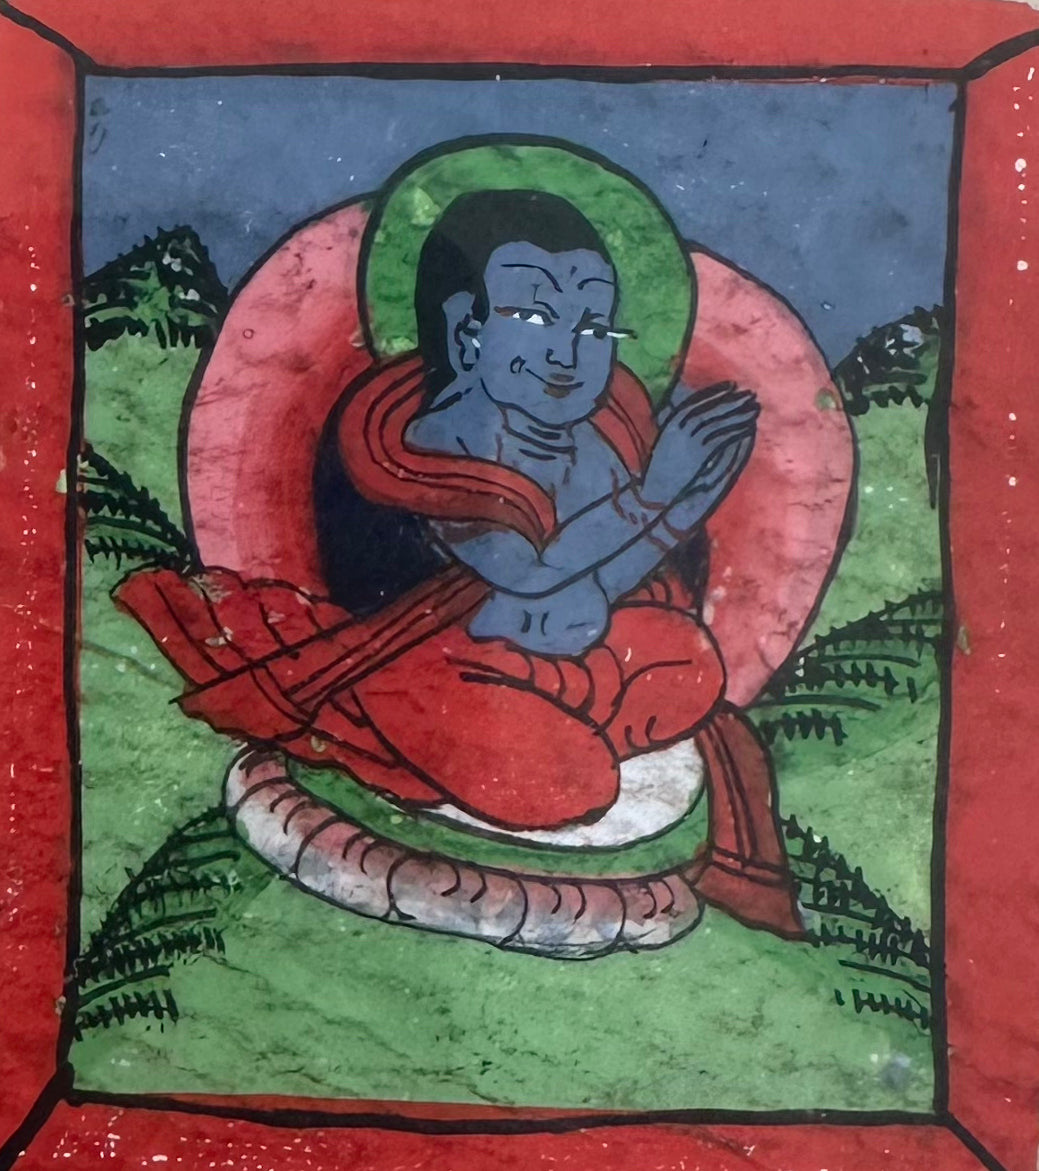 Tibetan Manuscript Paintings, Painting set of 9, Antique Buddhist Paintings, Buddhist Painting, Tibetan Art, Antique Art, Wall Art Original, Hand Painted,Series - 1 - DharBazaar